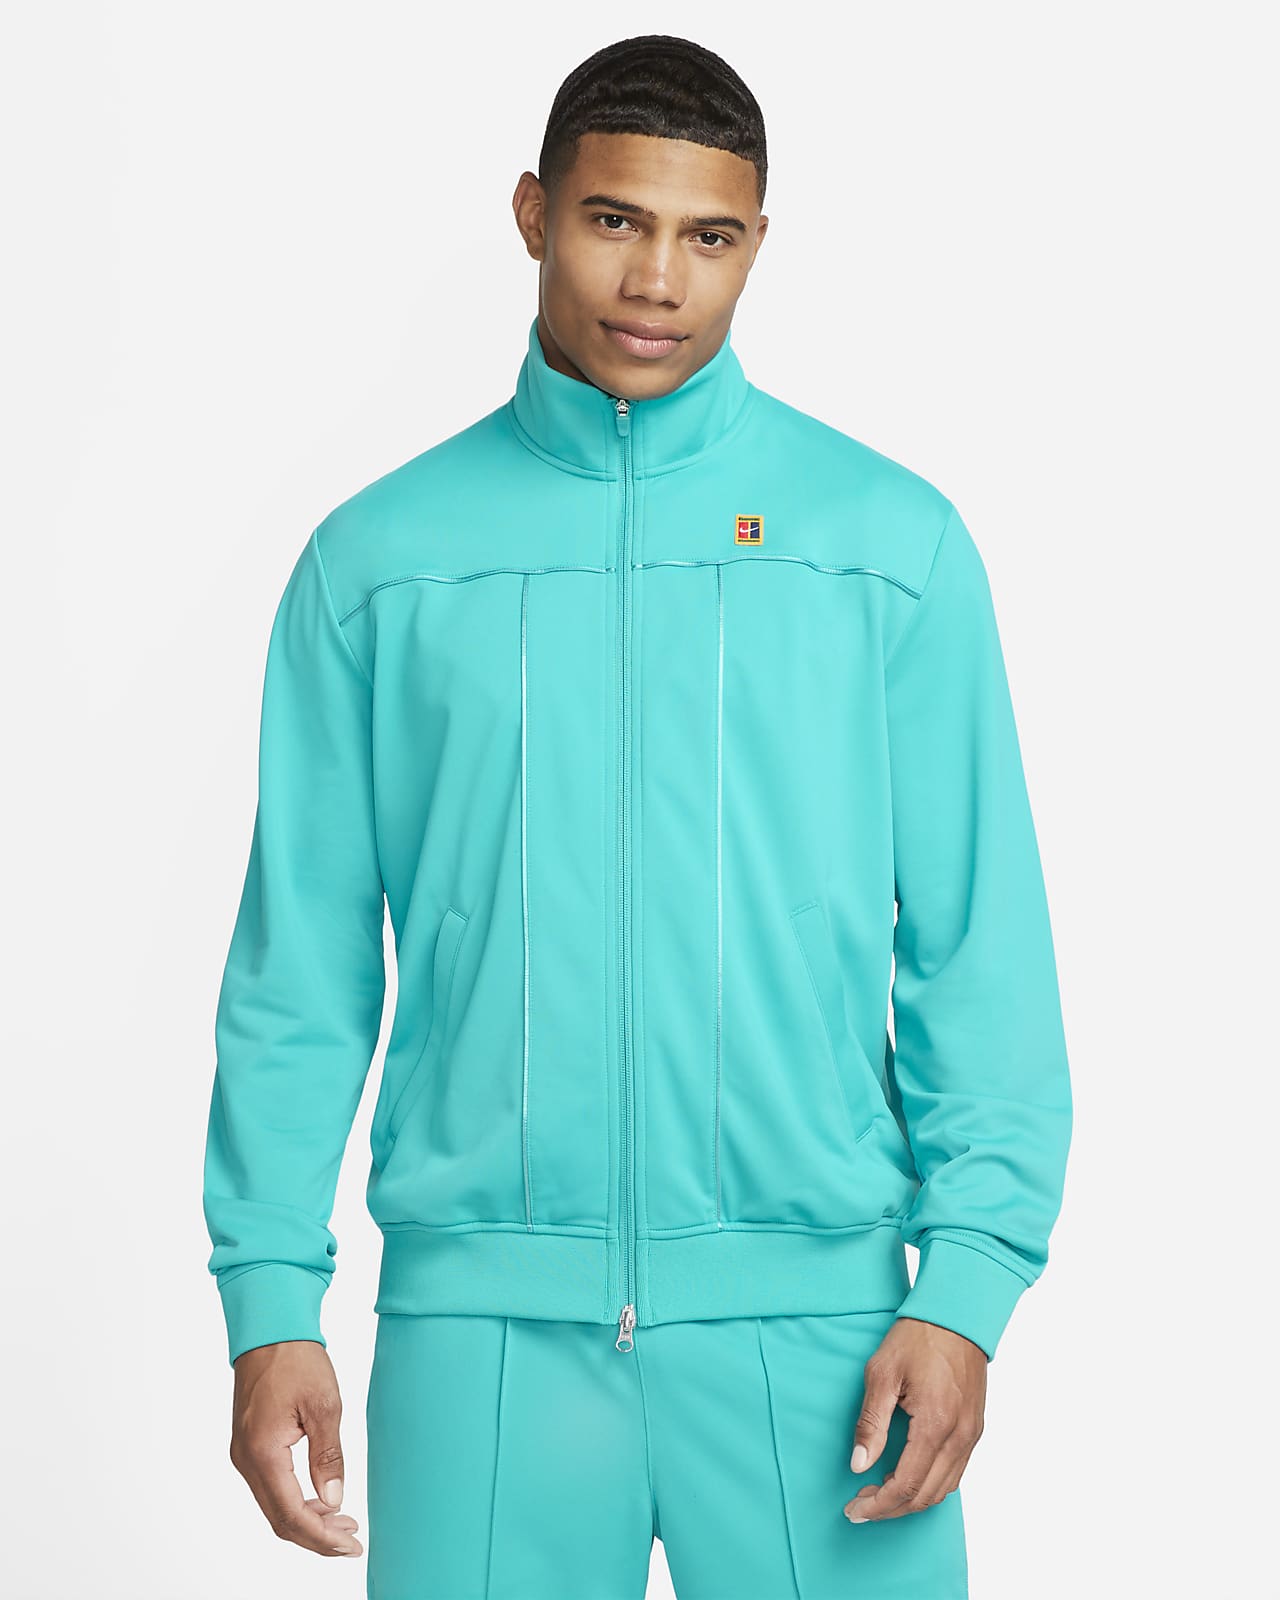 Nike Men's Court Heritage Tennis Jacket Teal Nebula, Size Medium